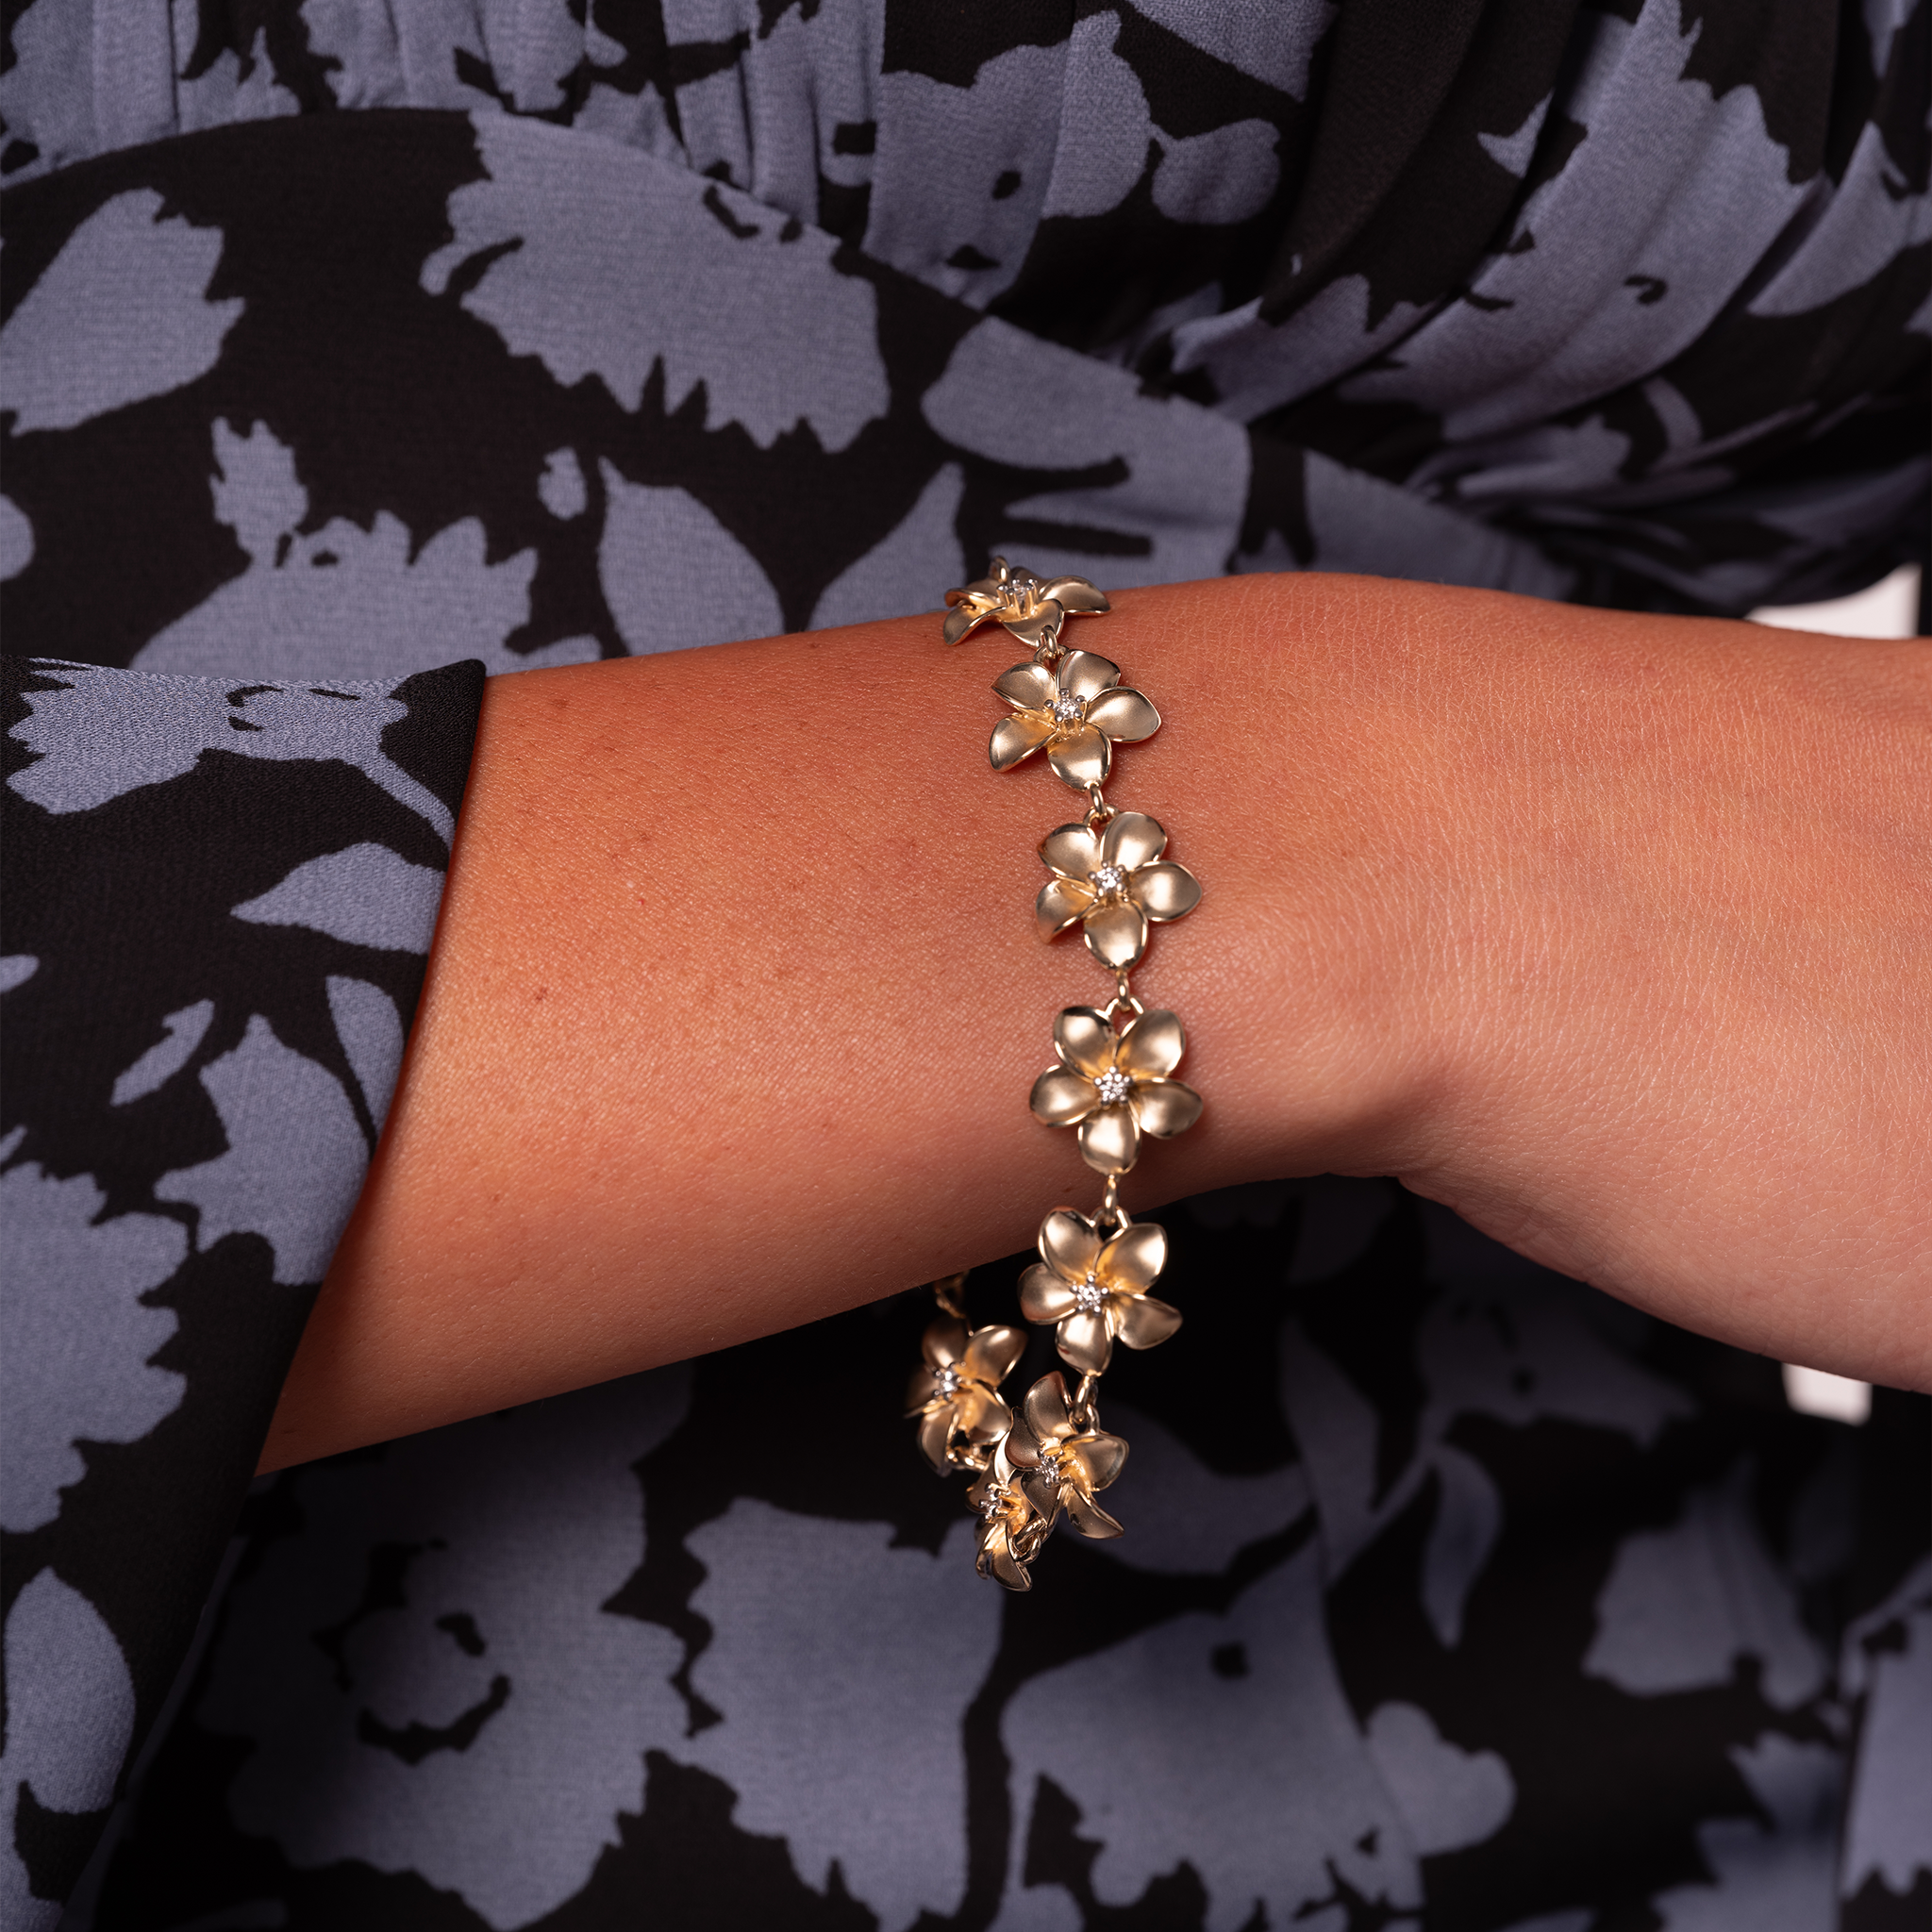 Plumeria Bracelet in Gold with Diamonds - 13mm - Size 7.25"